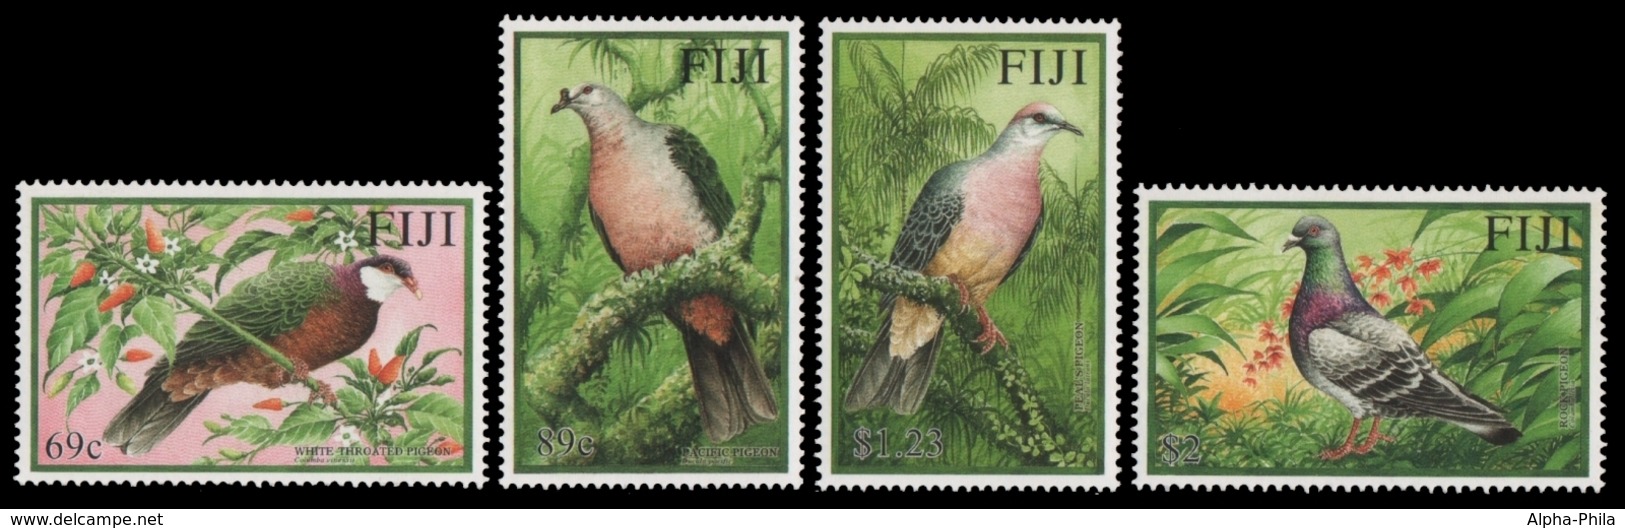 Fidschi 2001 - Mi-Nr. 970-973 ** - MNH - Vögel / Birds - Fiji (1970-...)